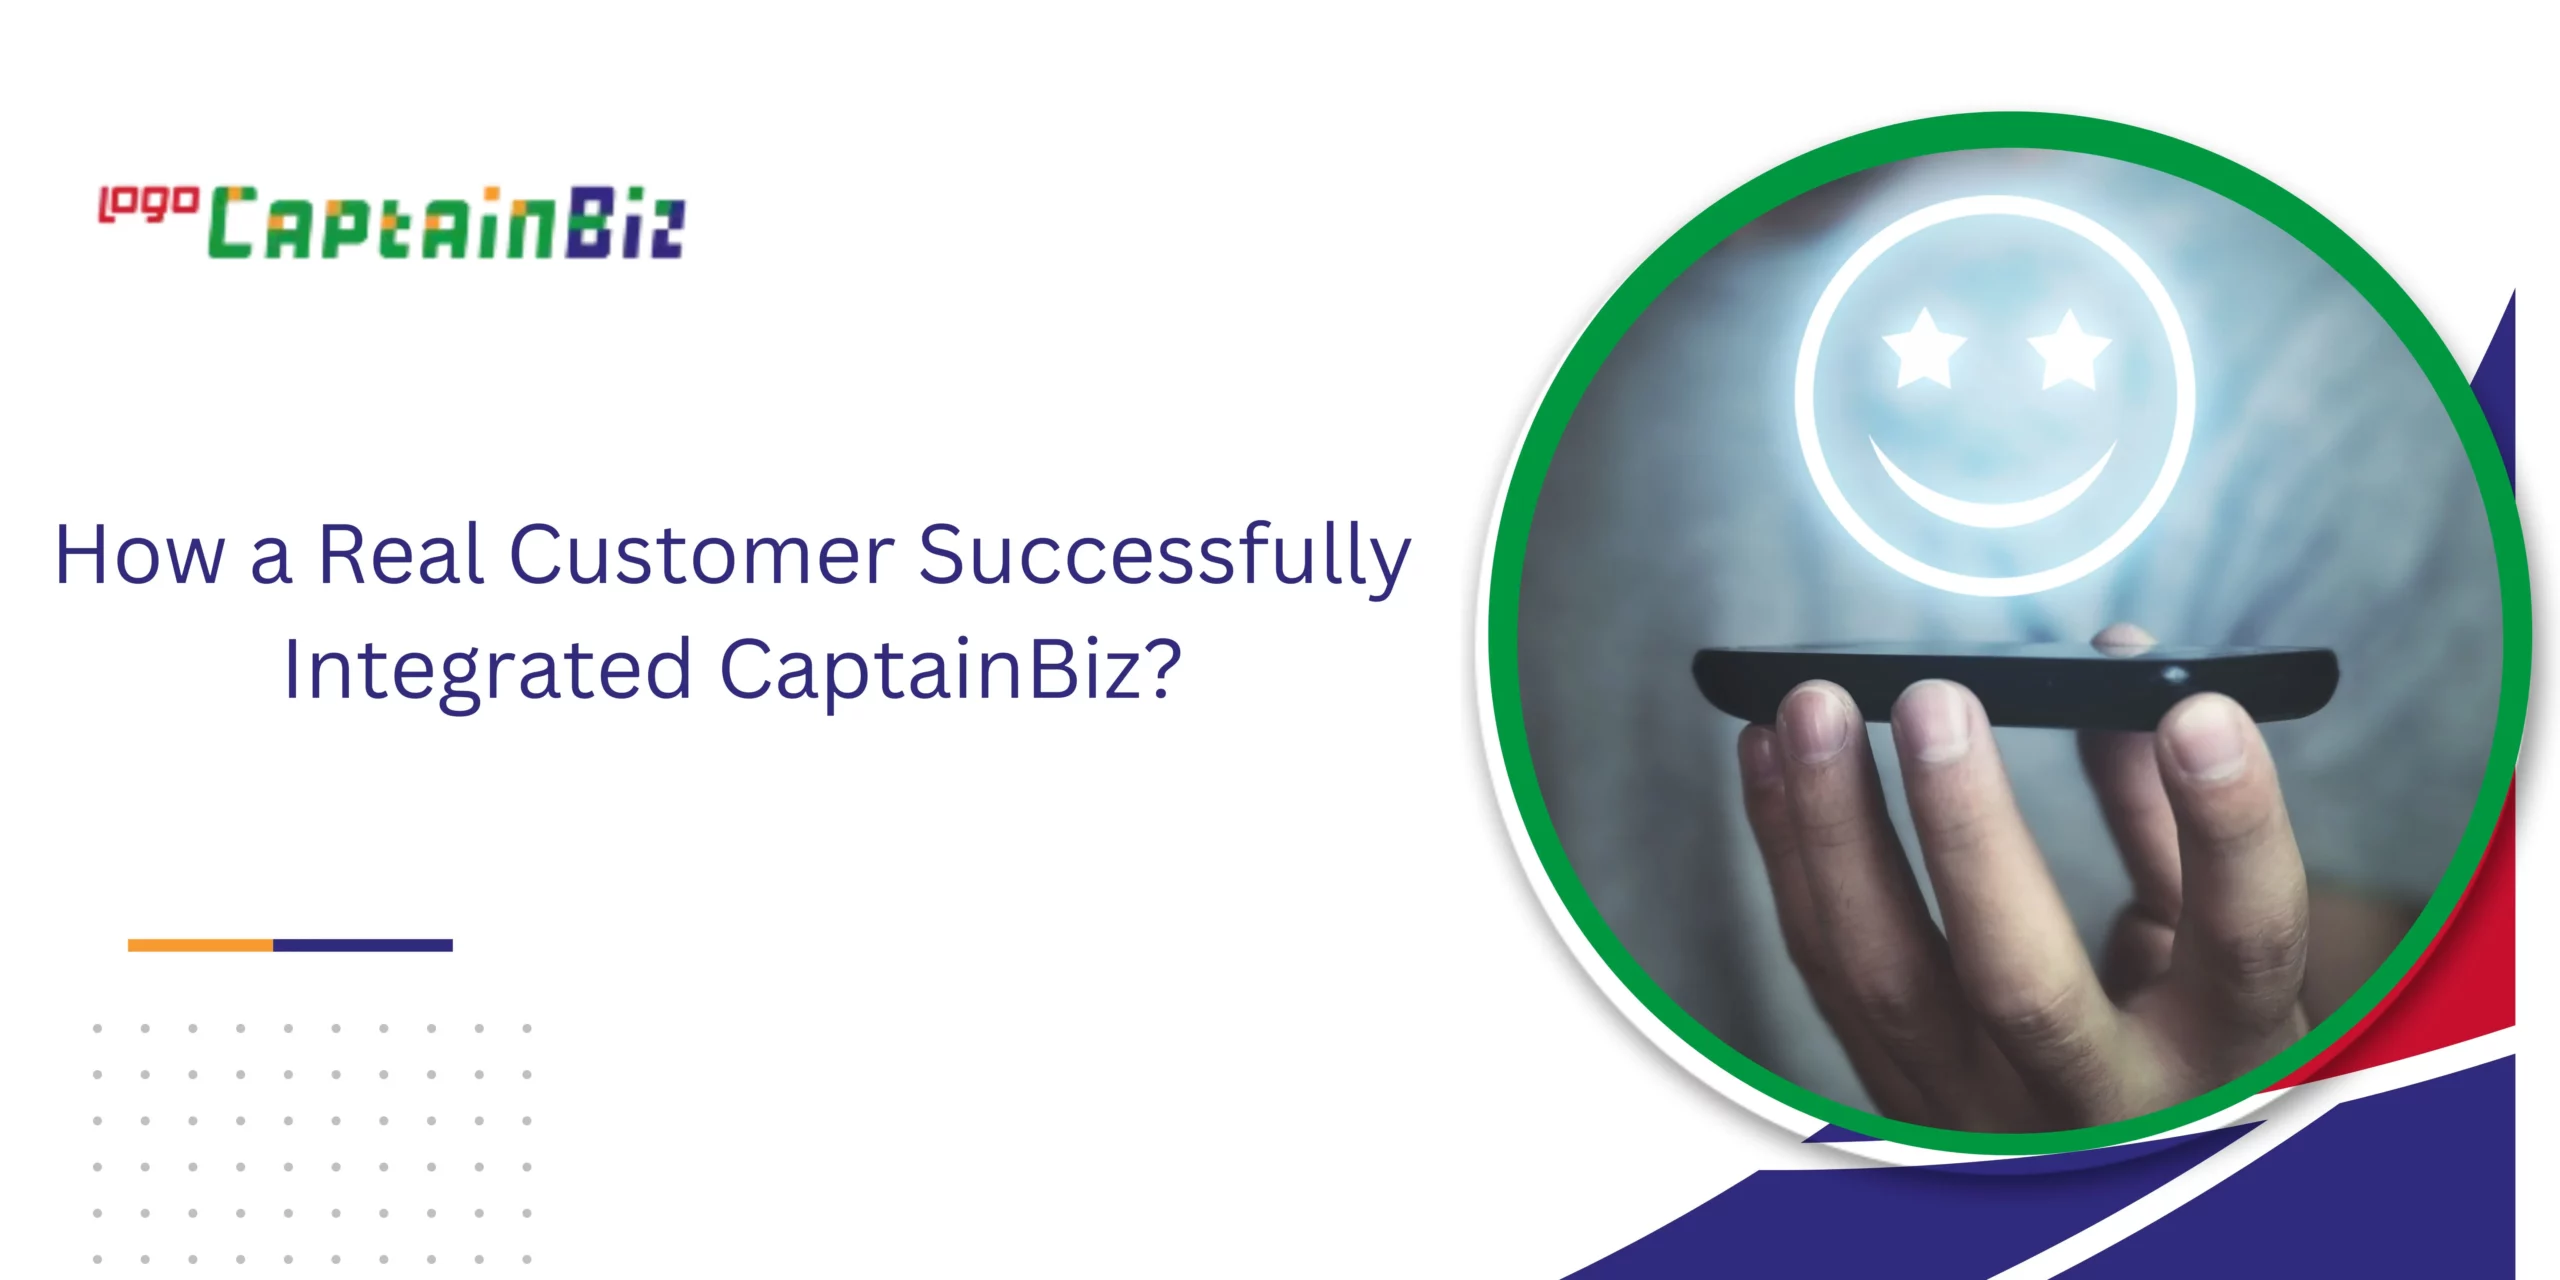 CaptainBiz: How a Real Customer Successfully Integrated CaptainBiz